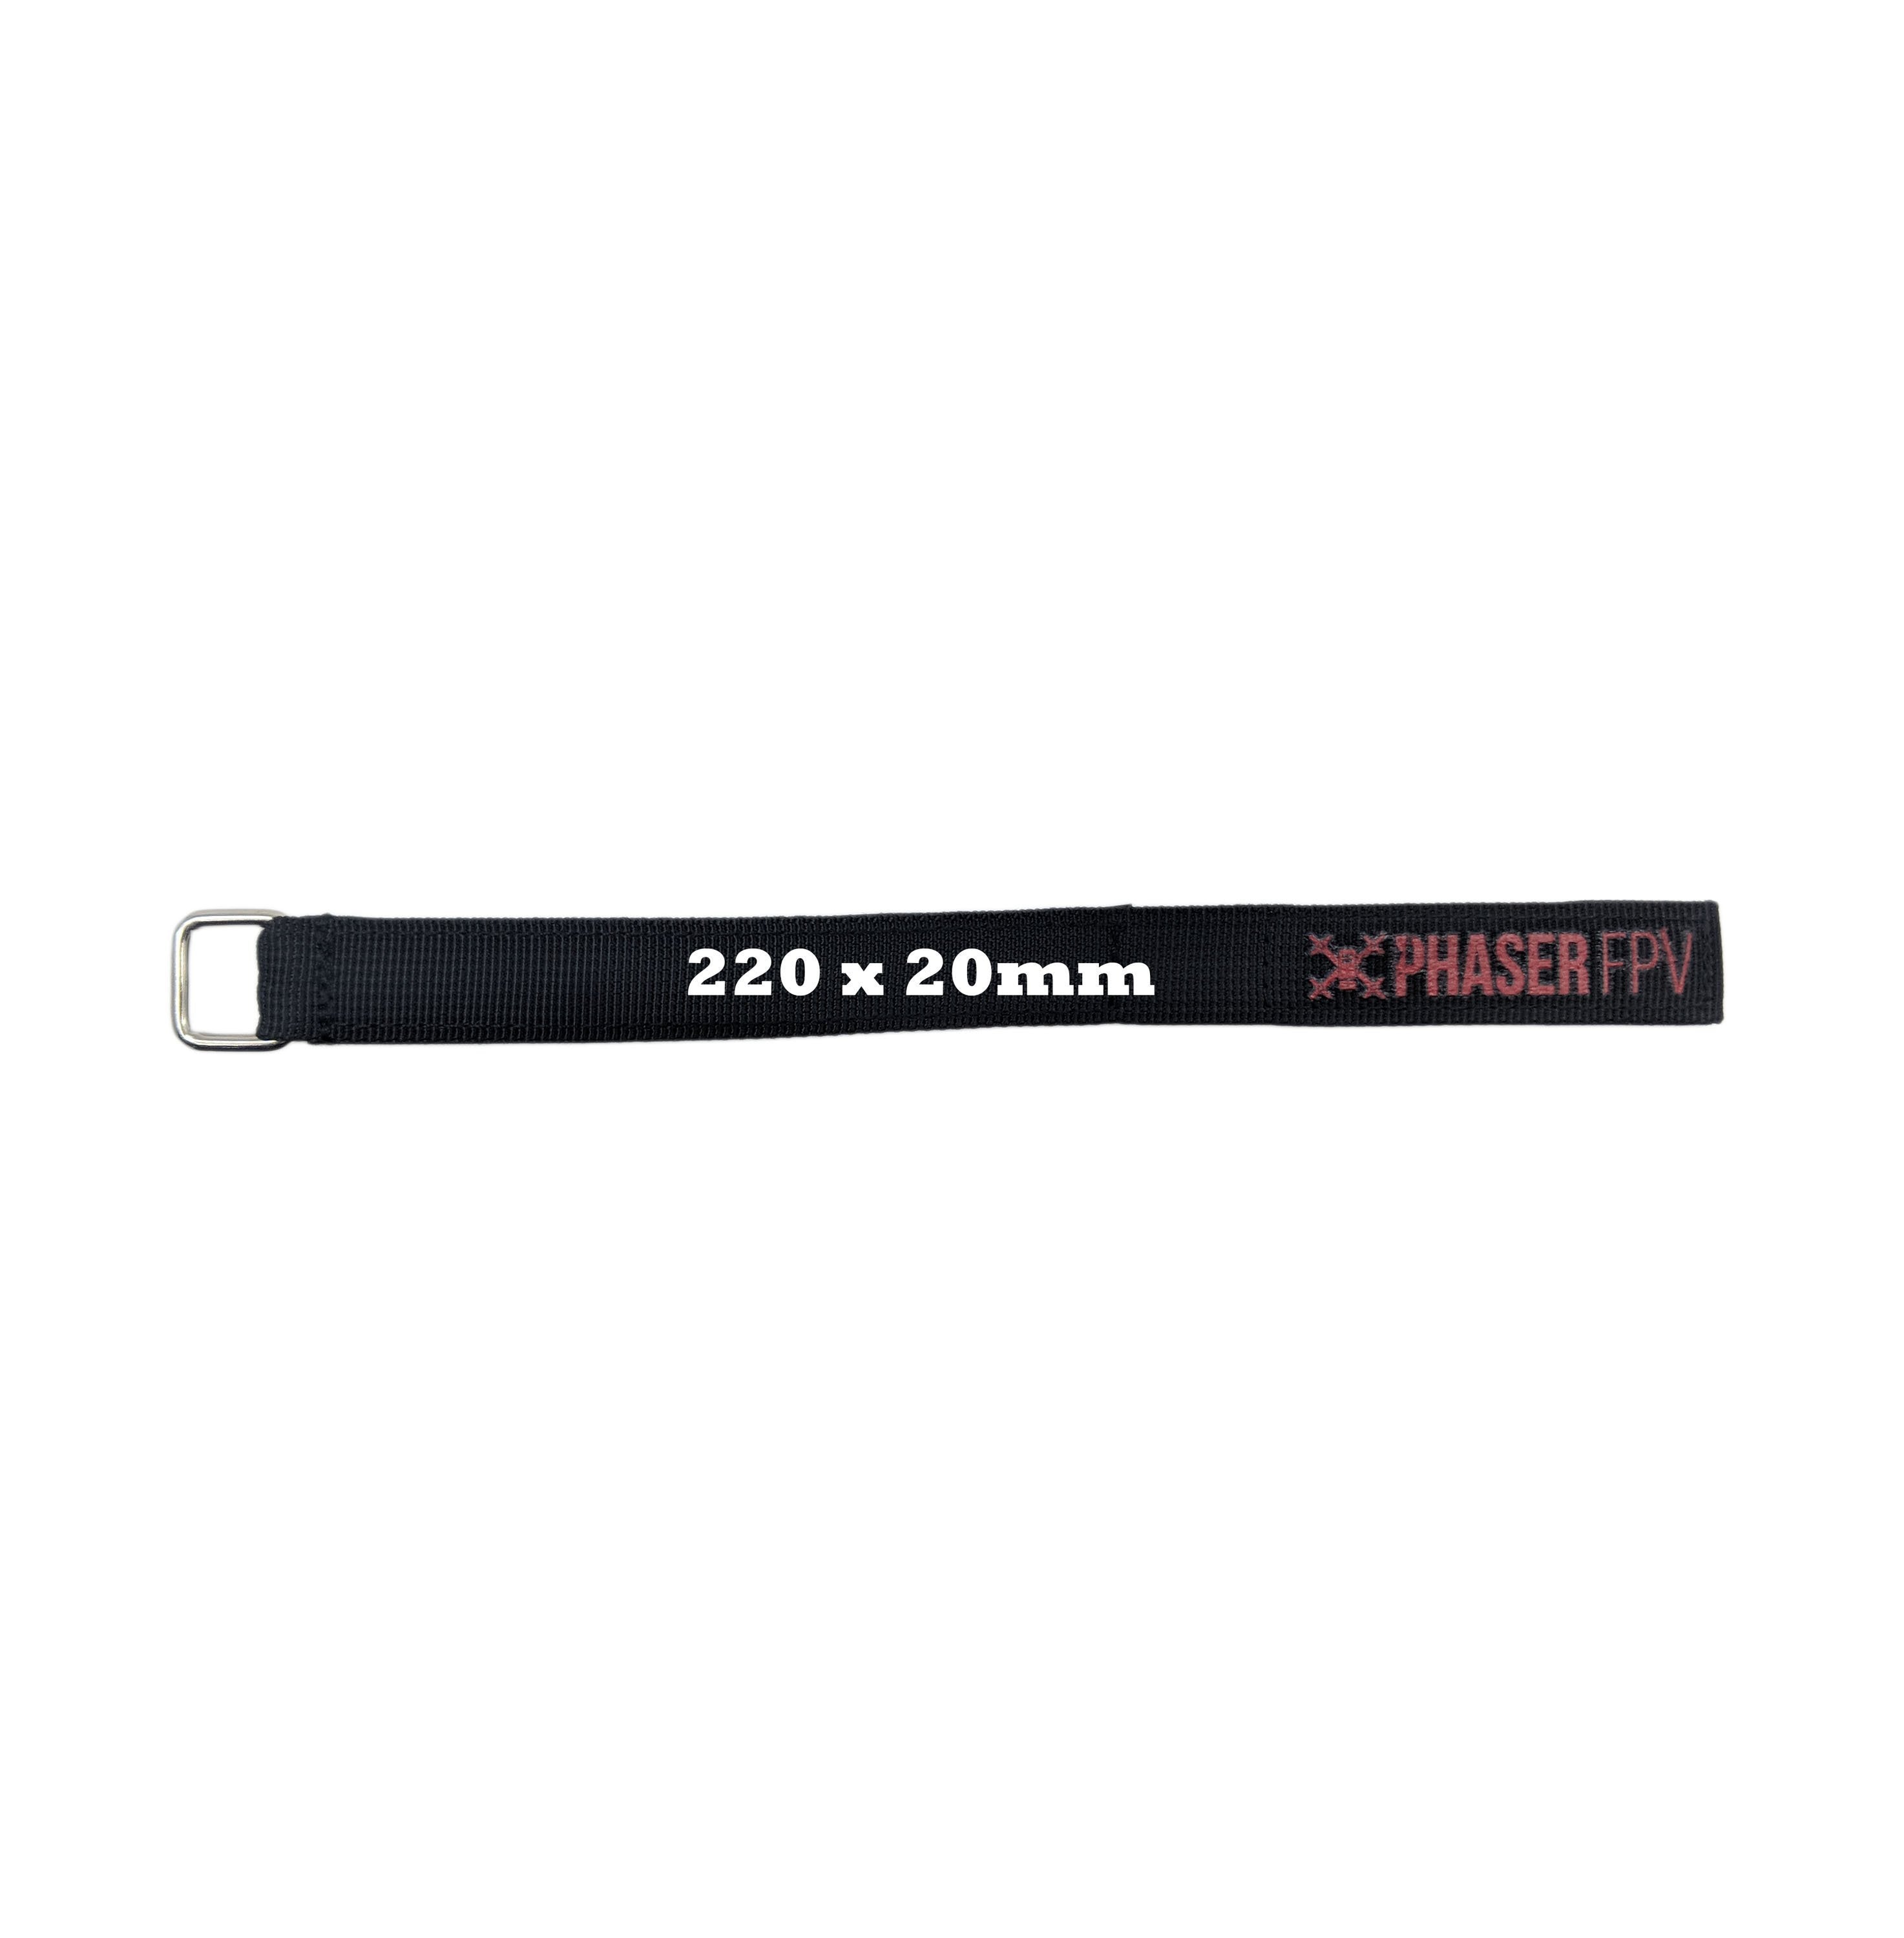 Lipo Battery Strap 220x20mm made of Nylon Webbing Phaser FPV Branded